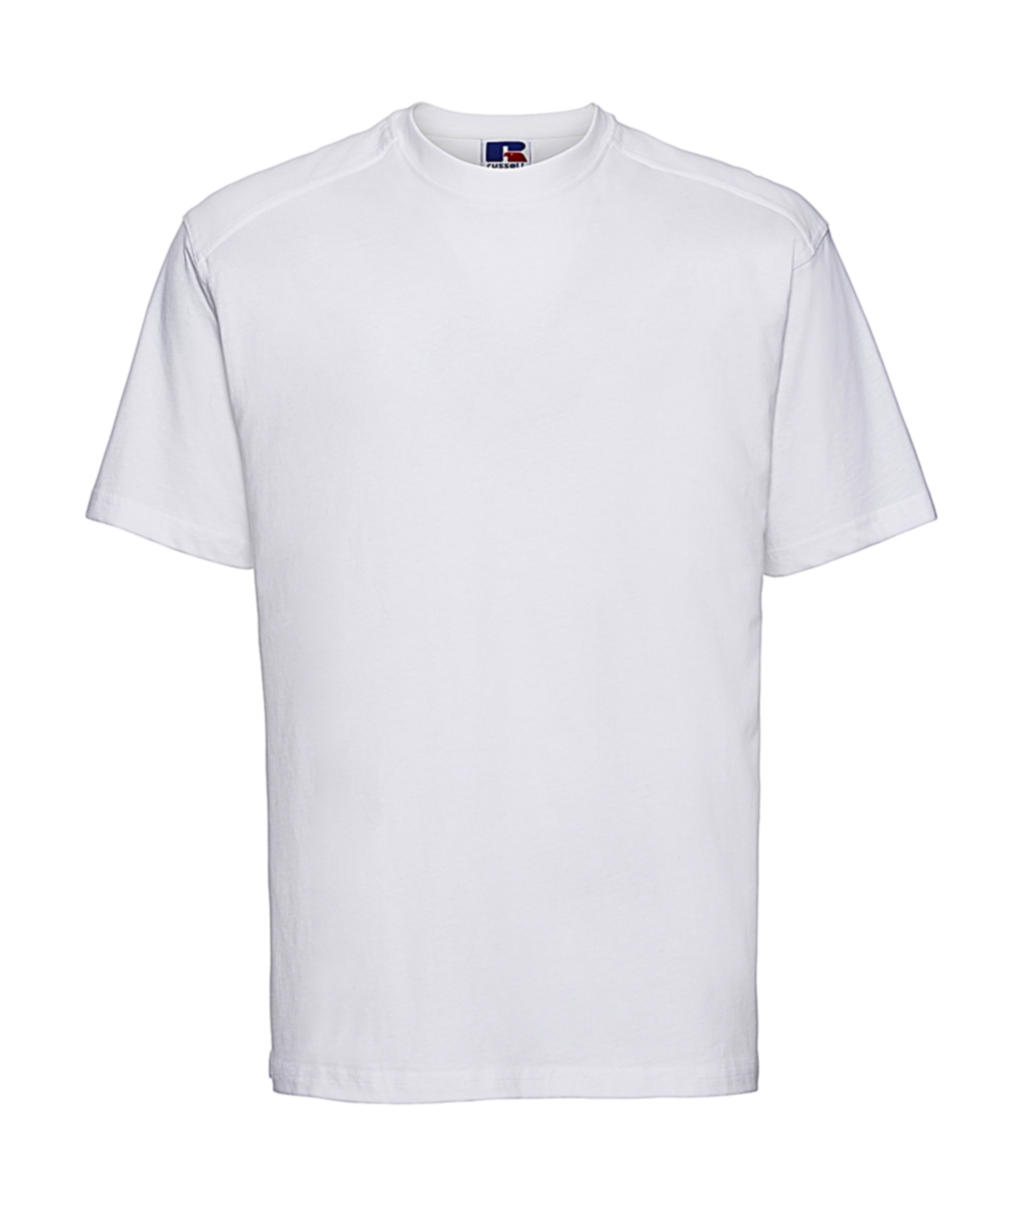  Heavy Duty Workwear T-Shirt in Farbe White